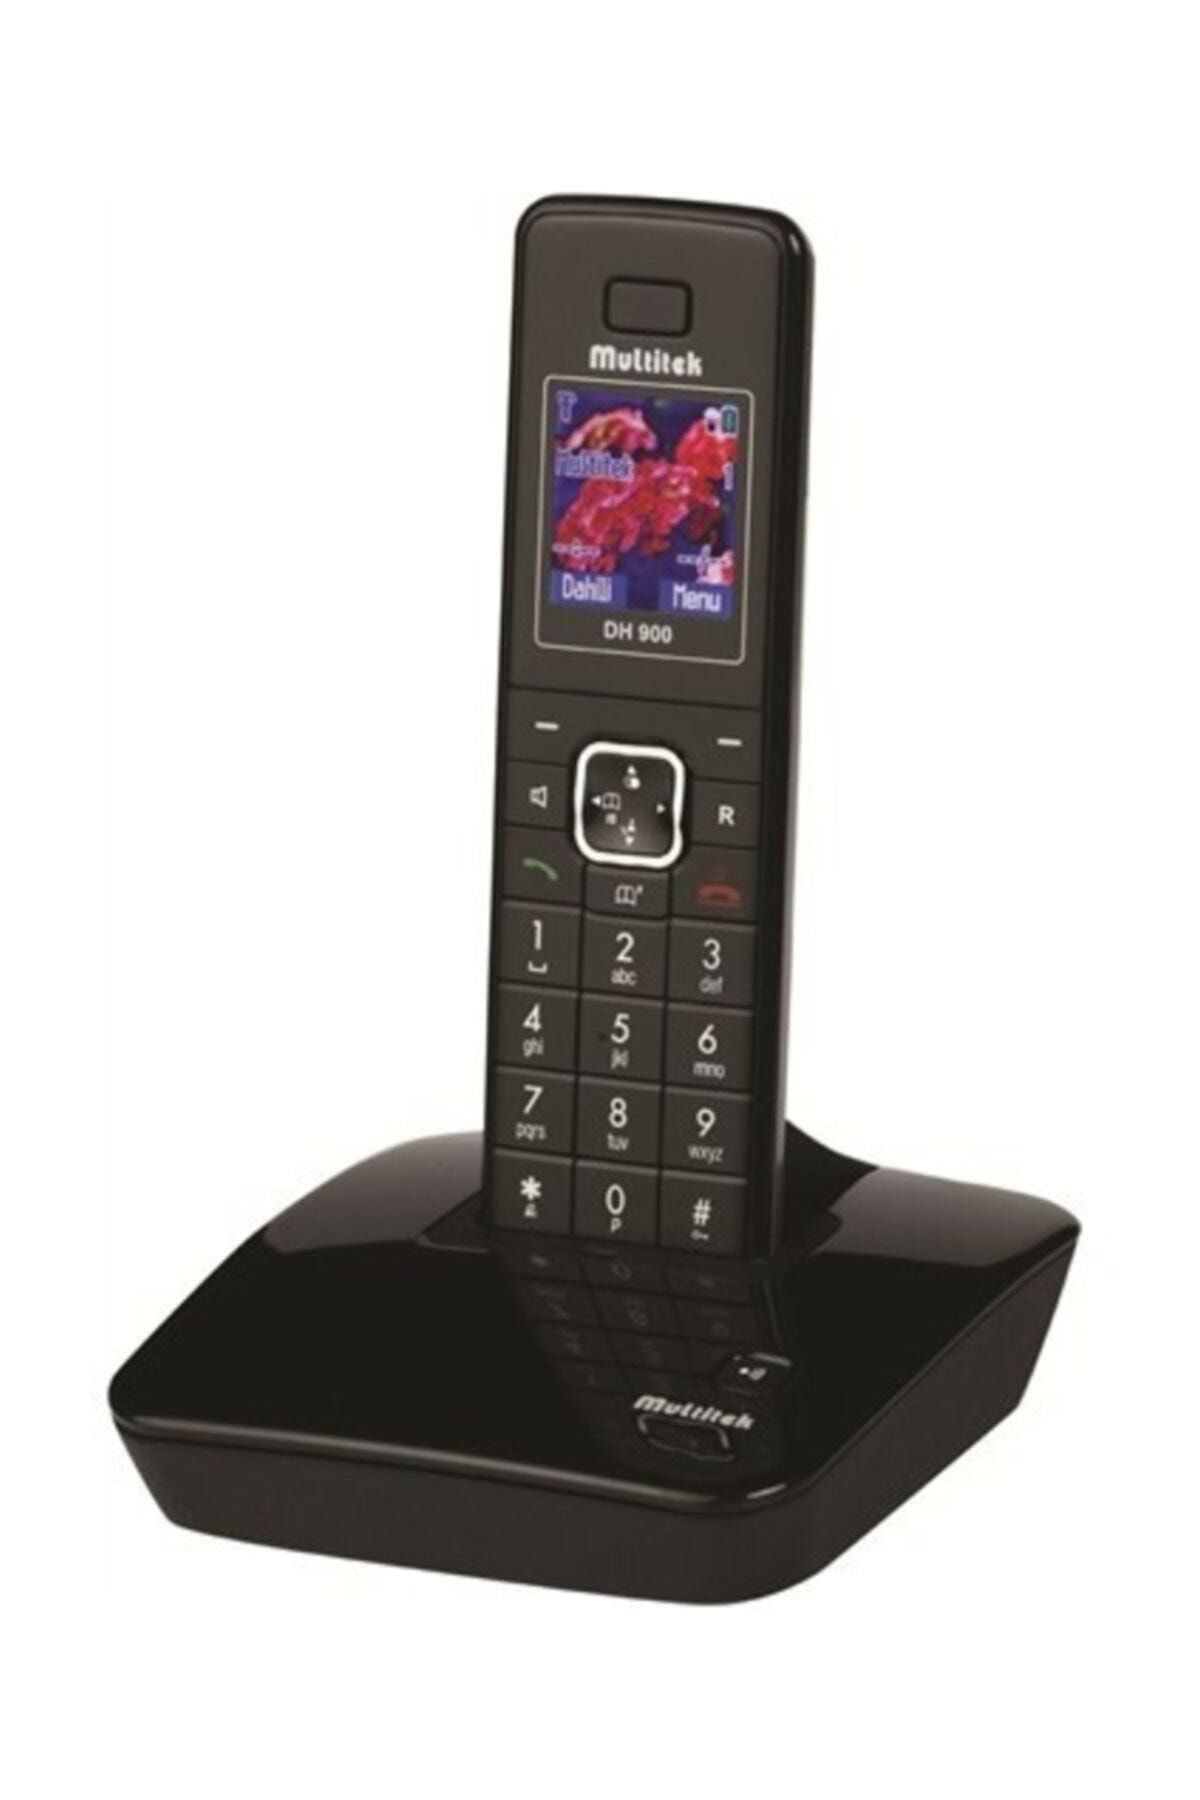 Türk Telekom Multitek Dh 900 Renkli Ekran Dect Telefon